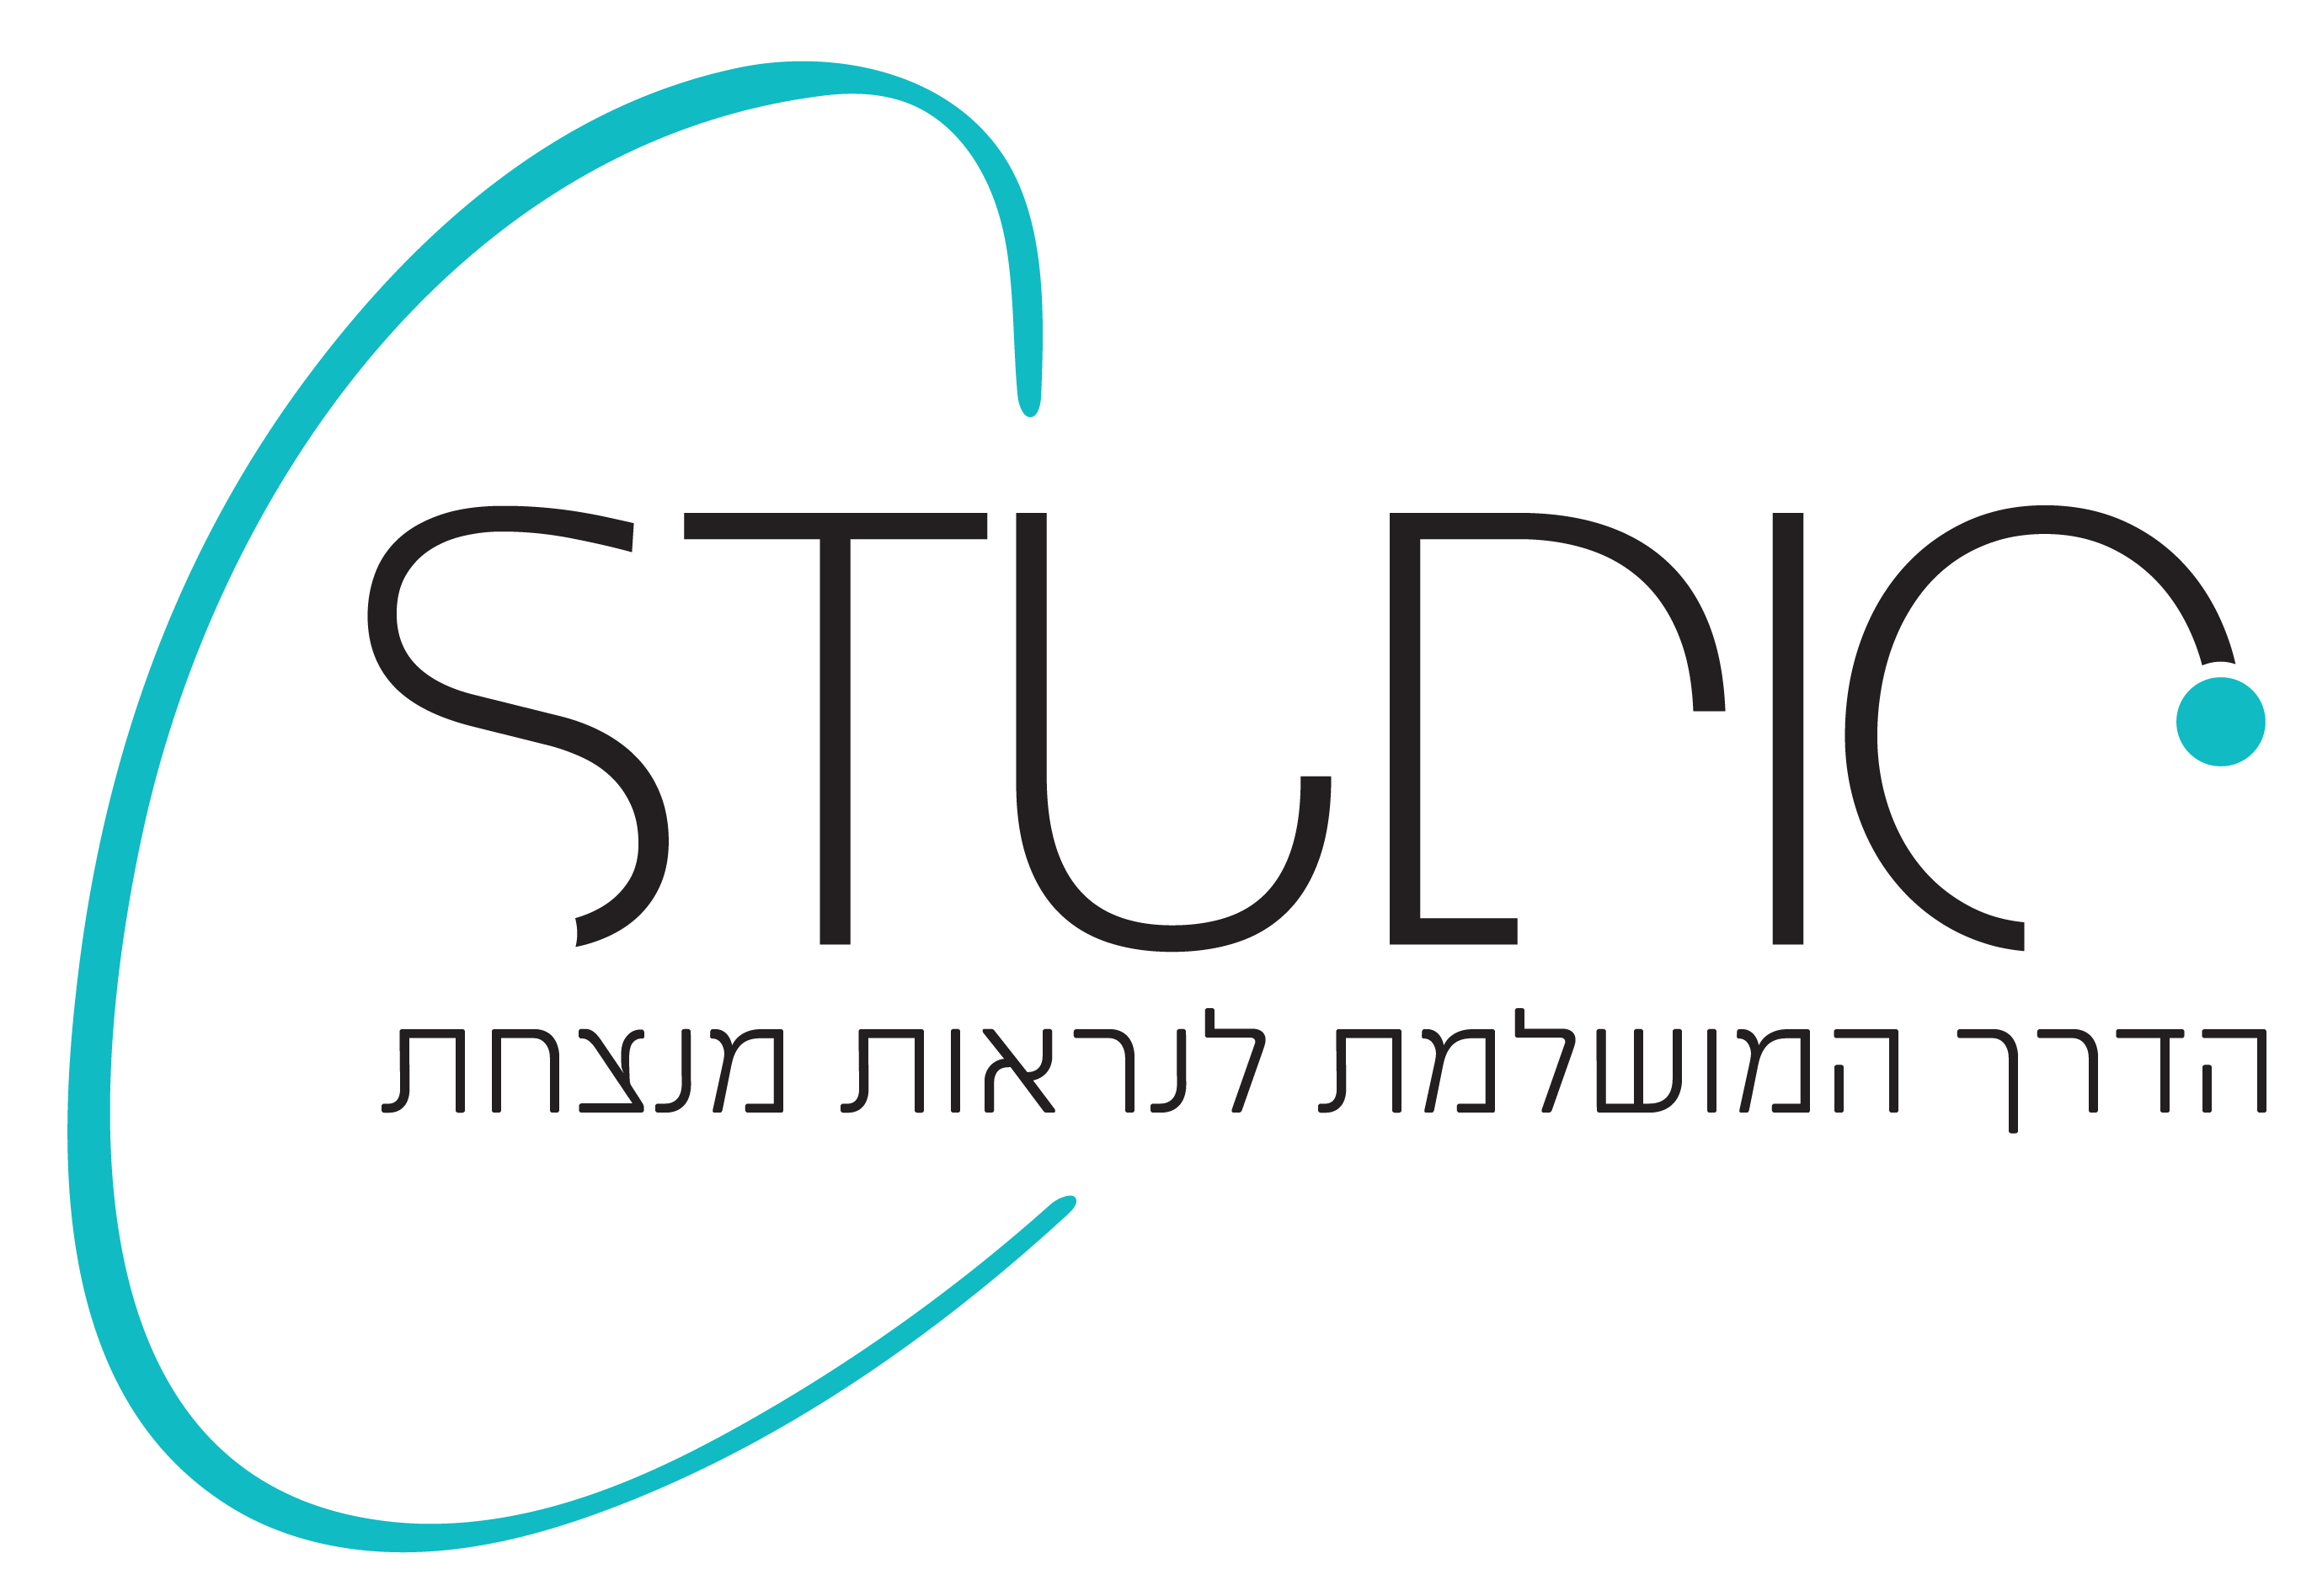 c-studio-logo